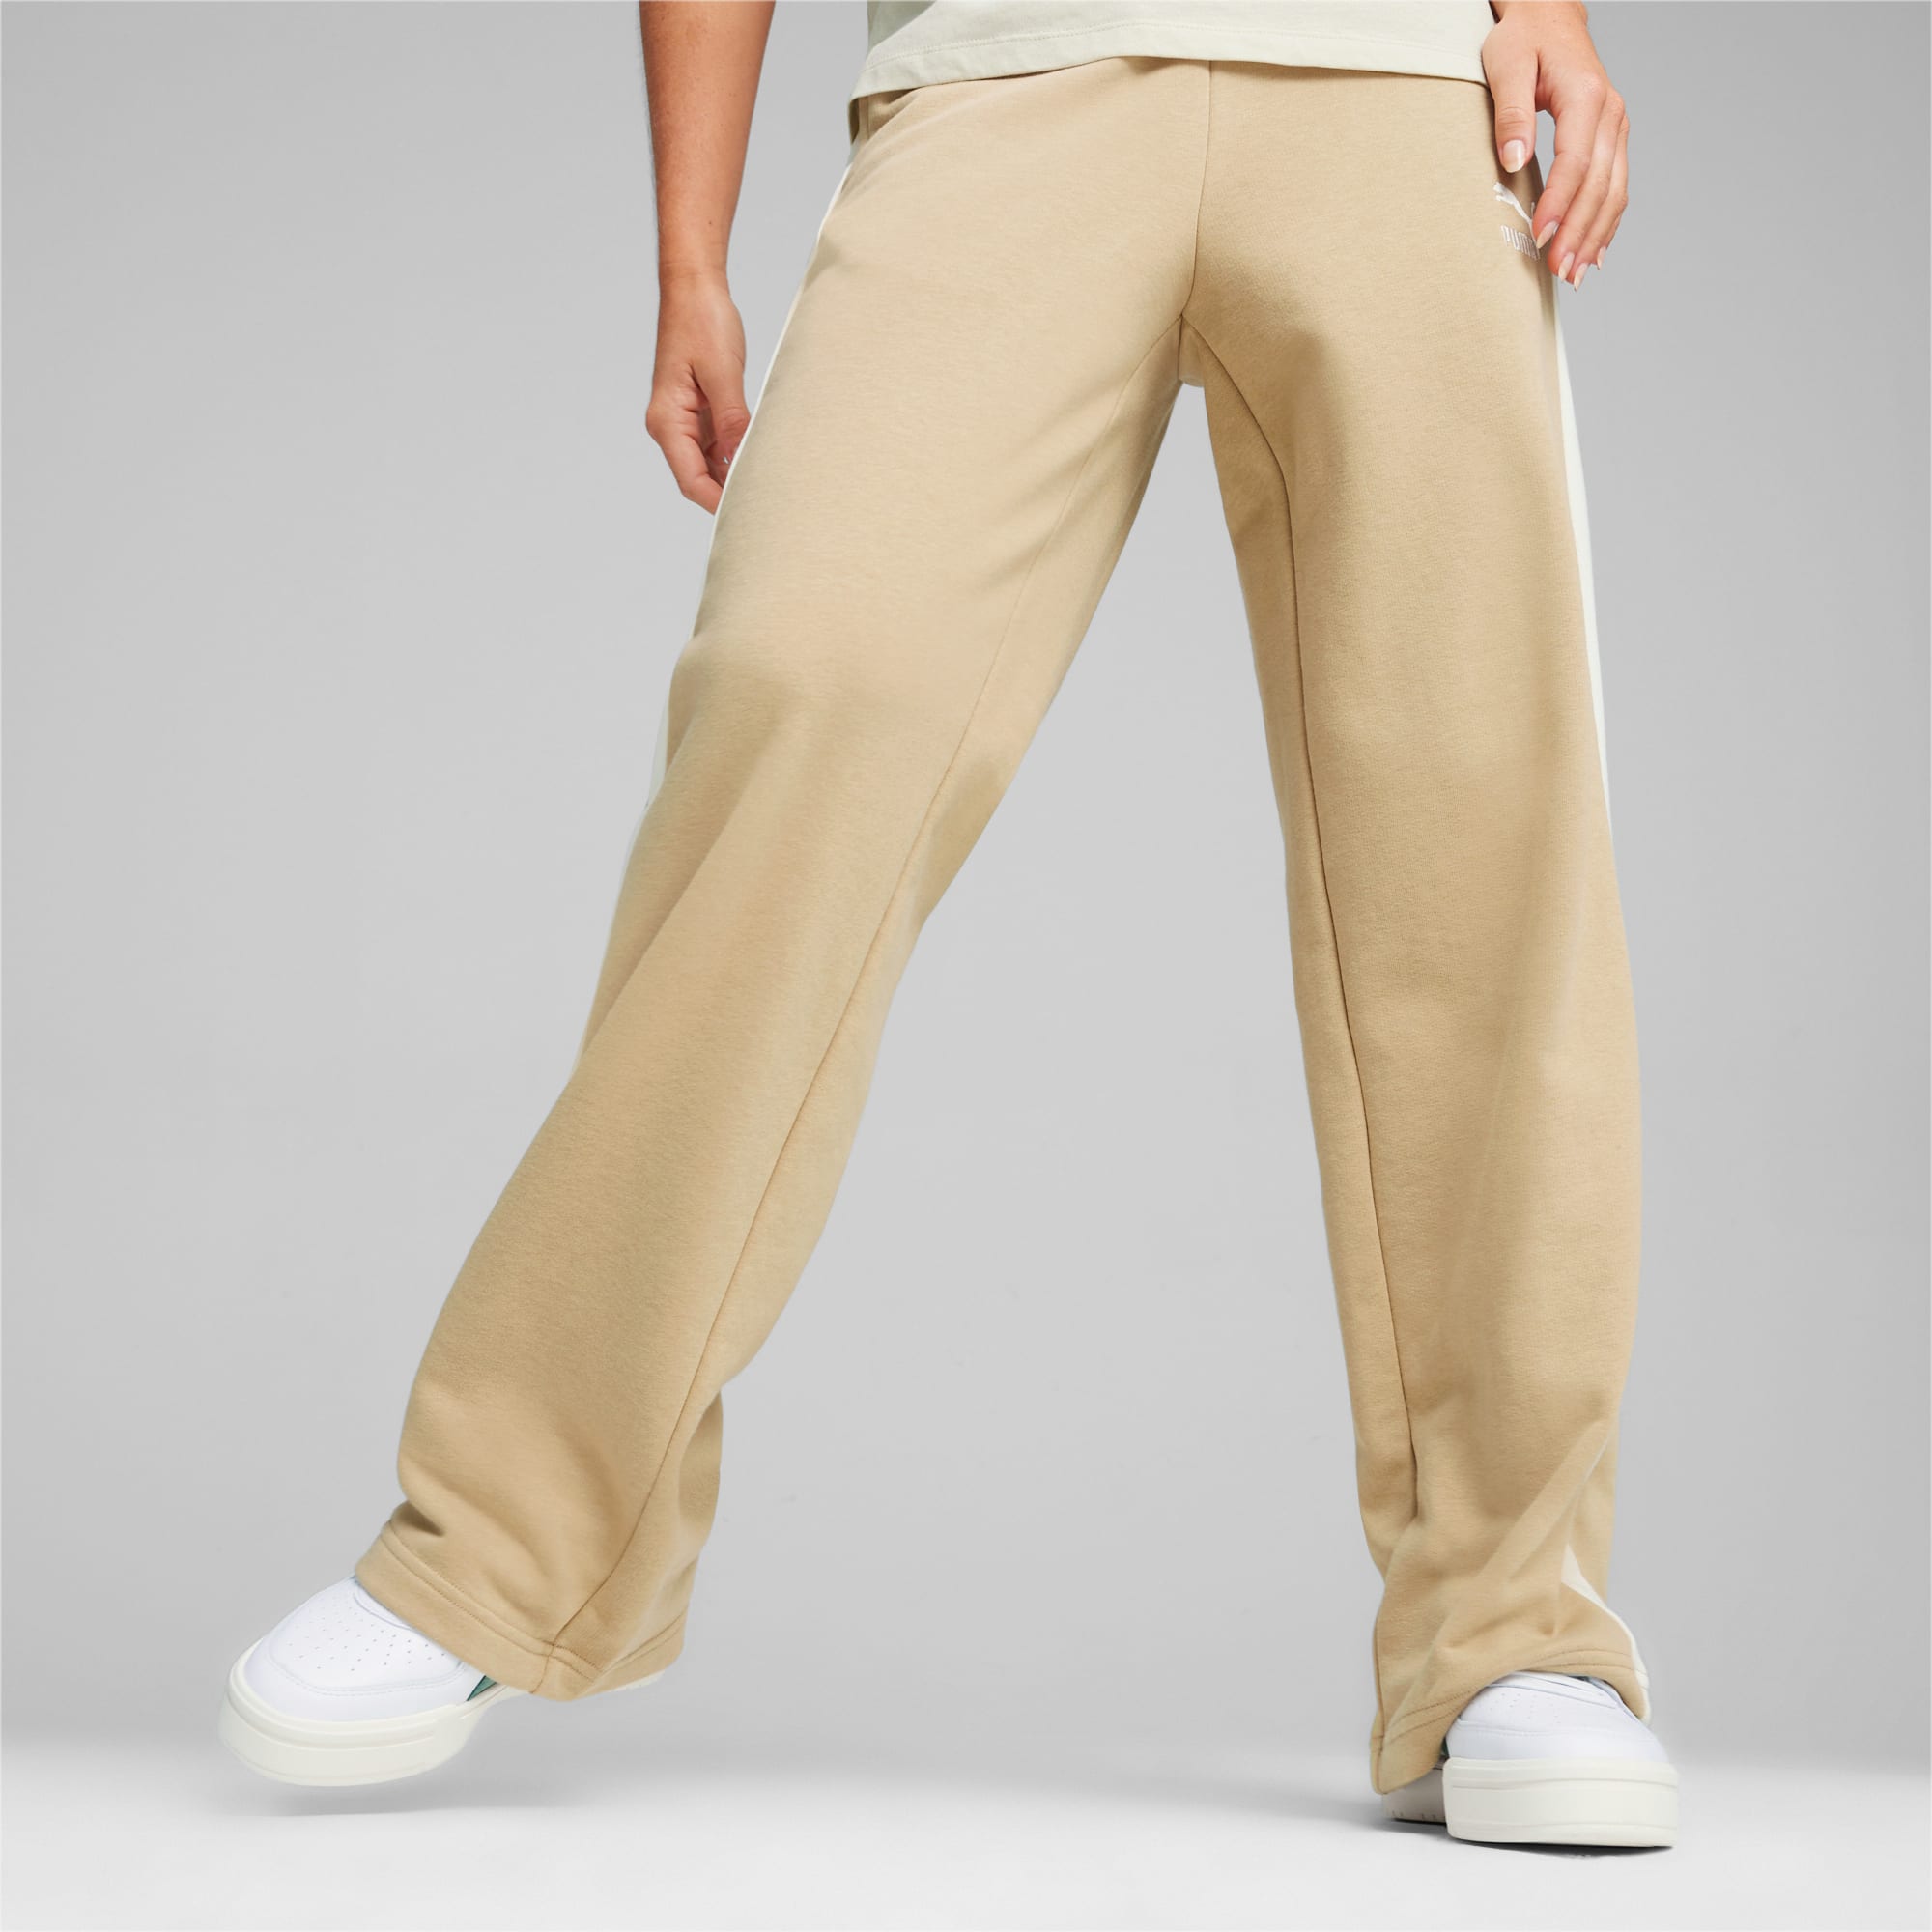 PUMA Iconic T7 Women's Straight Pants, Prairie Tan, Size S, Clothing